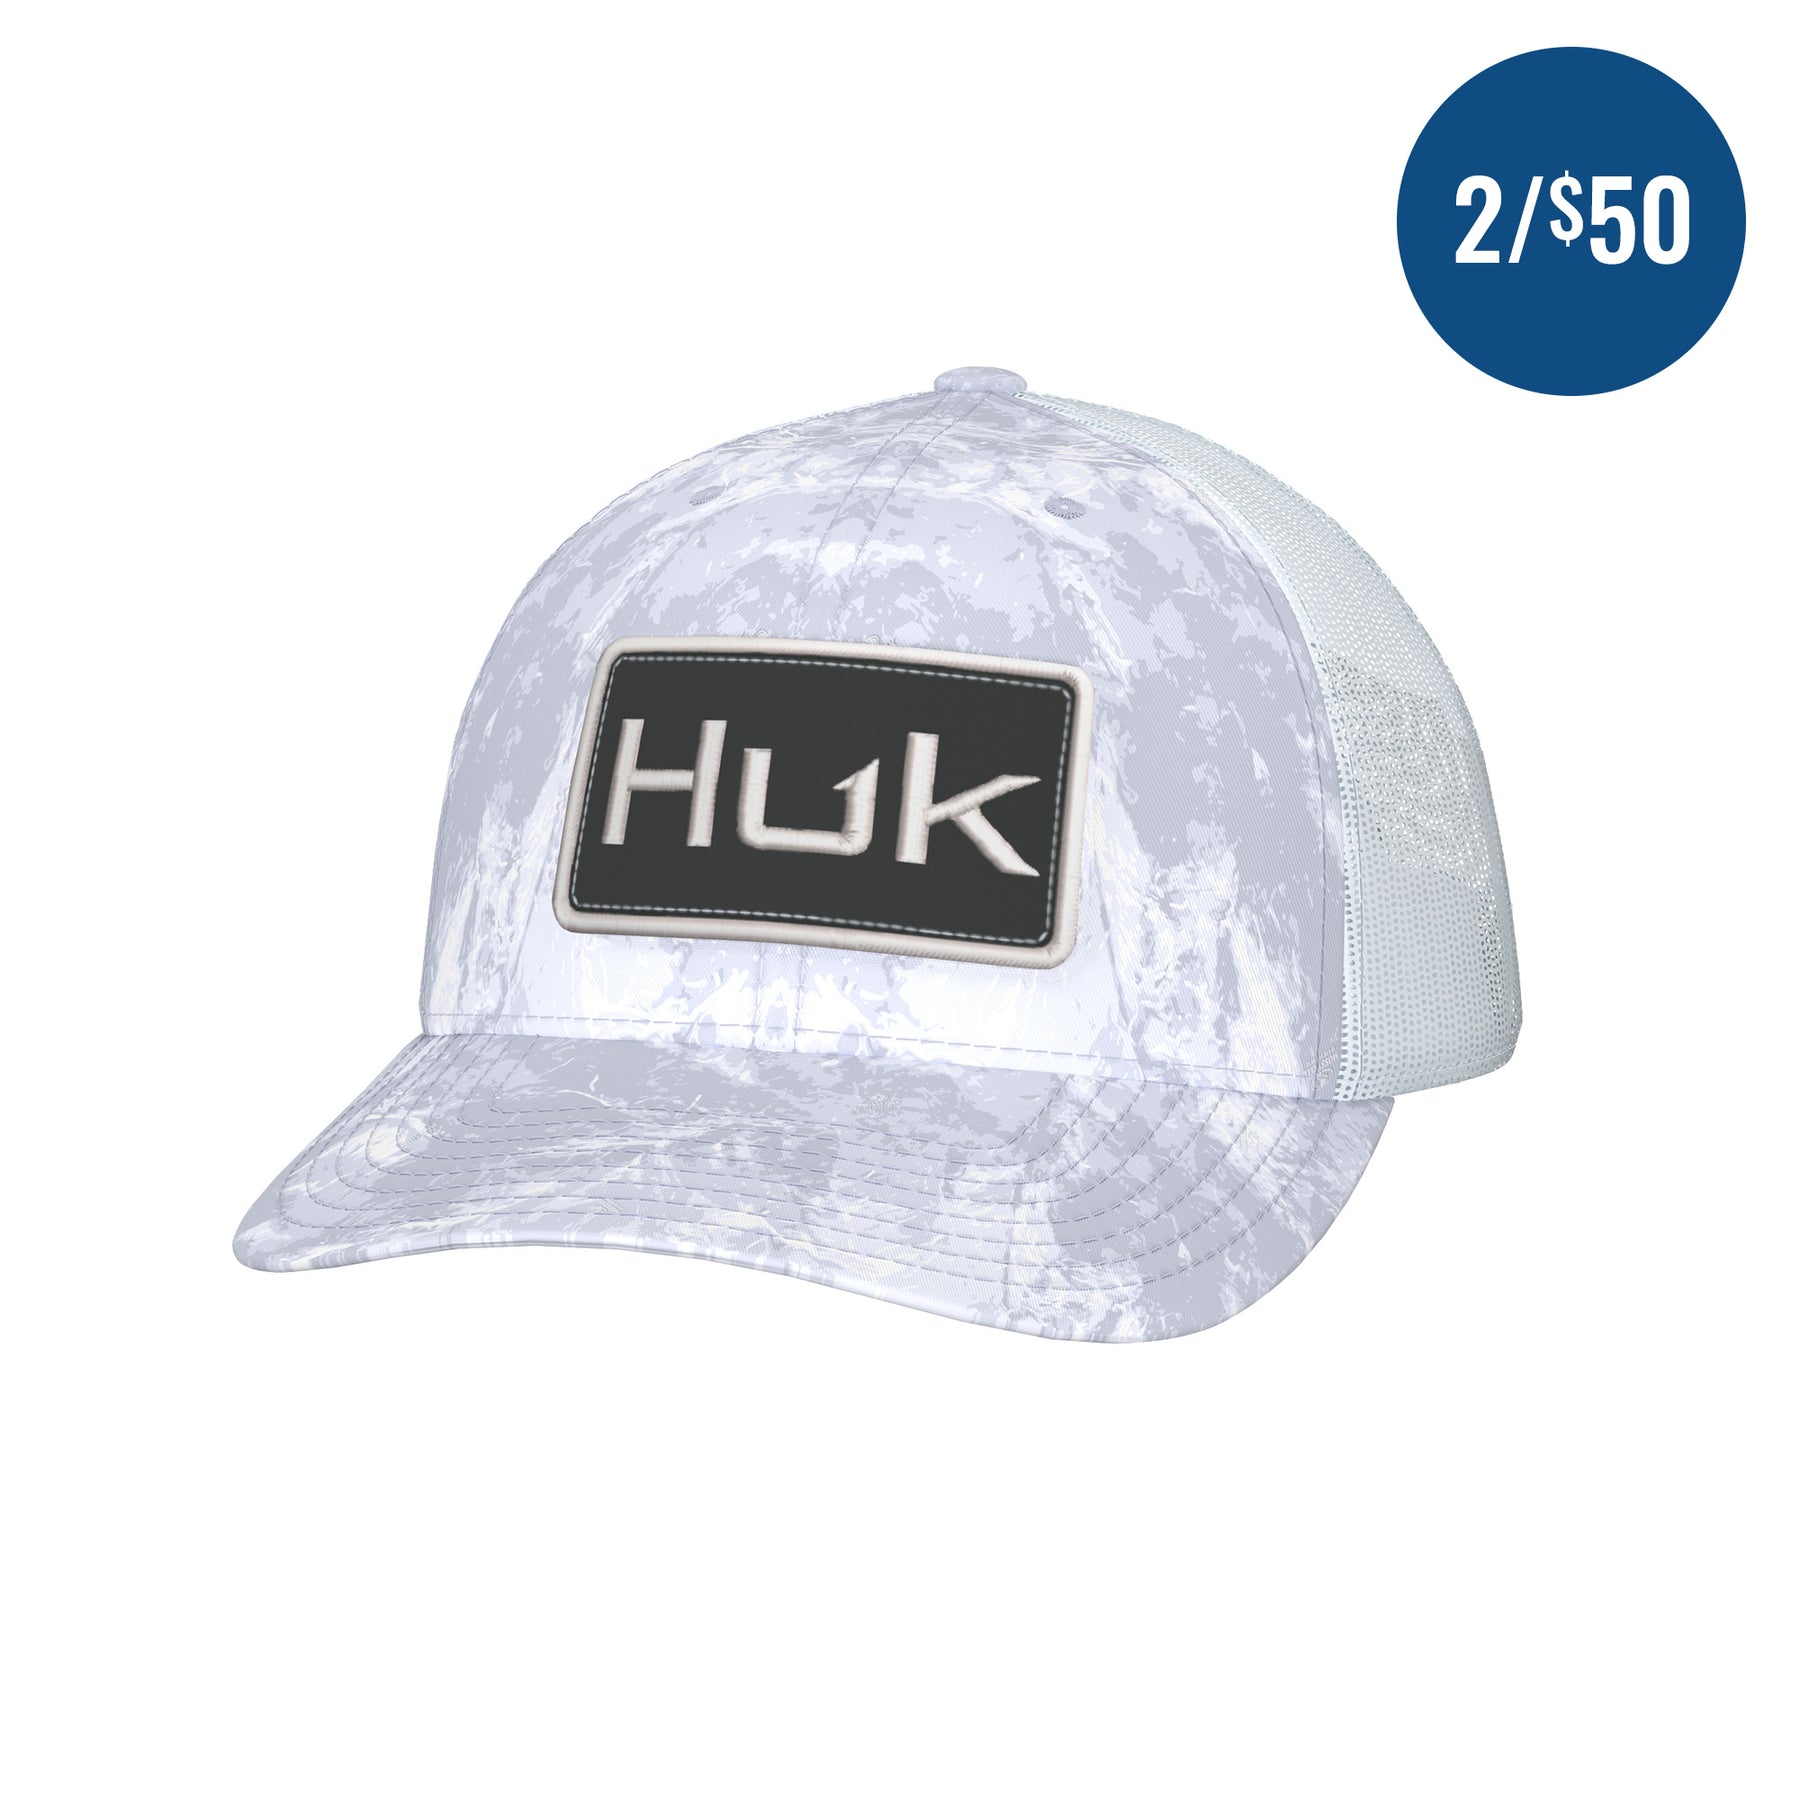 HUK Men's Aqua Dye Trucker Hat - OSFM